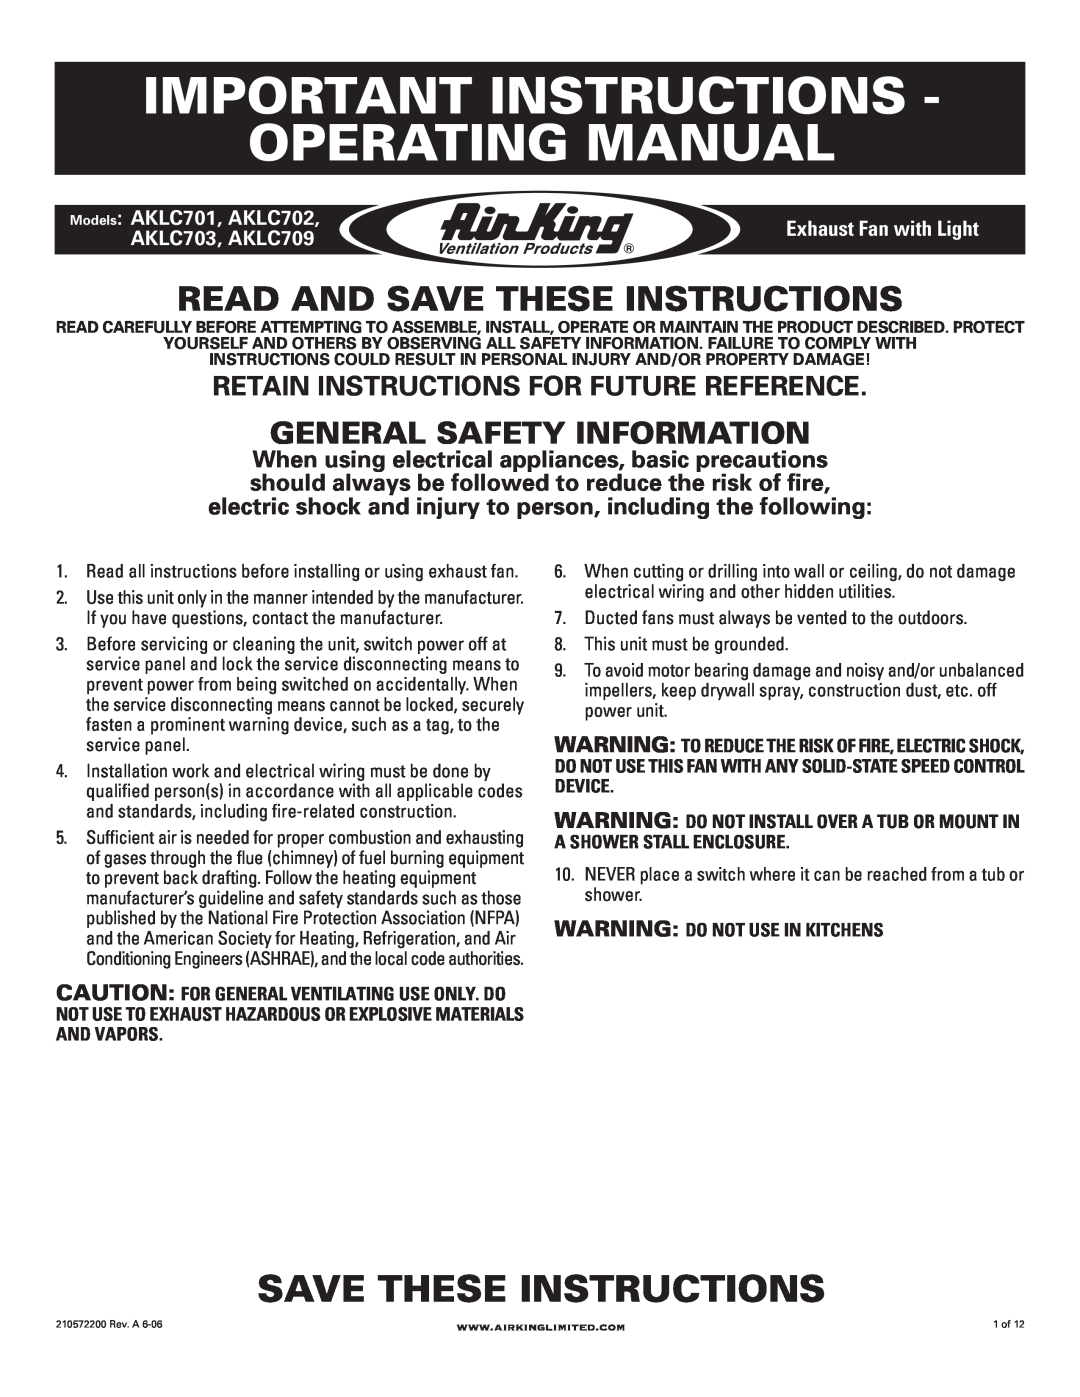 Air King manual Important Instructions Operating Manual, Read And Save These Instructions, AKLC703, AKLC709 